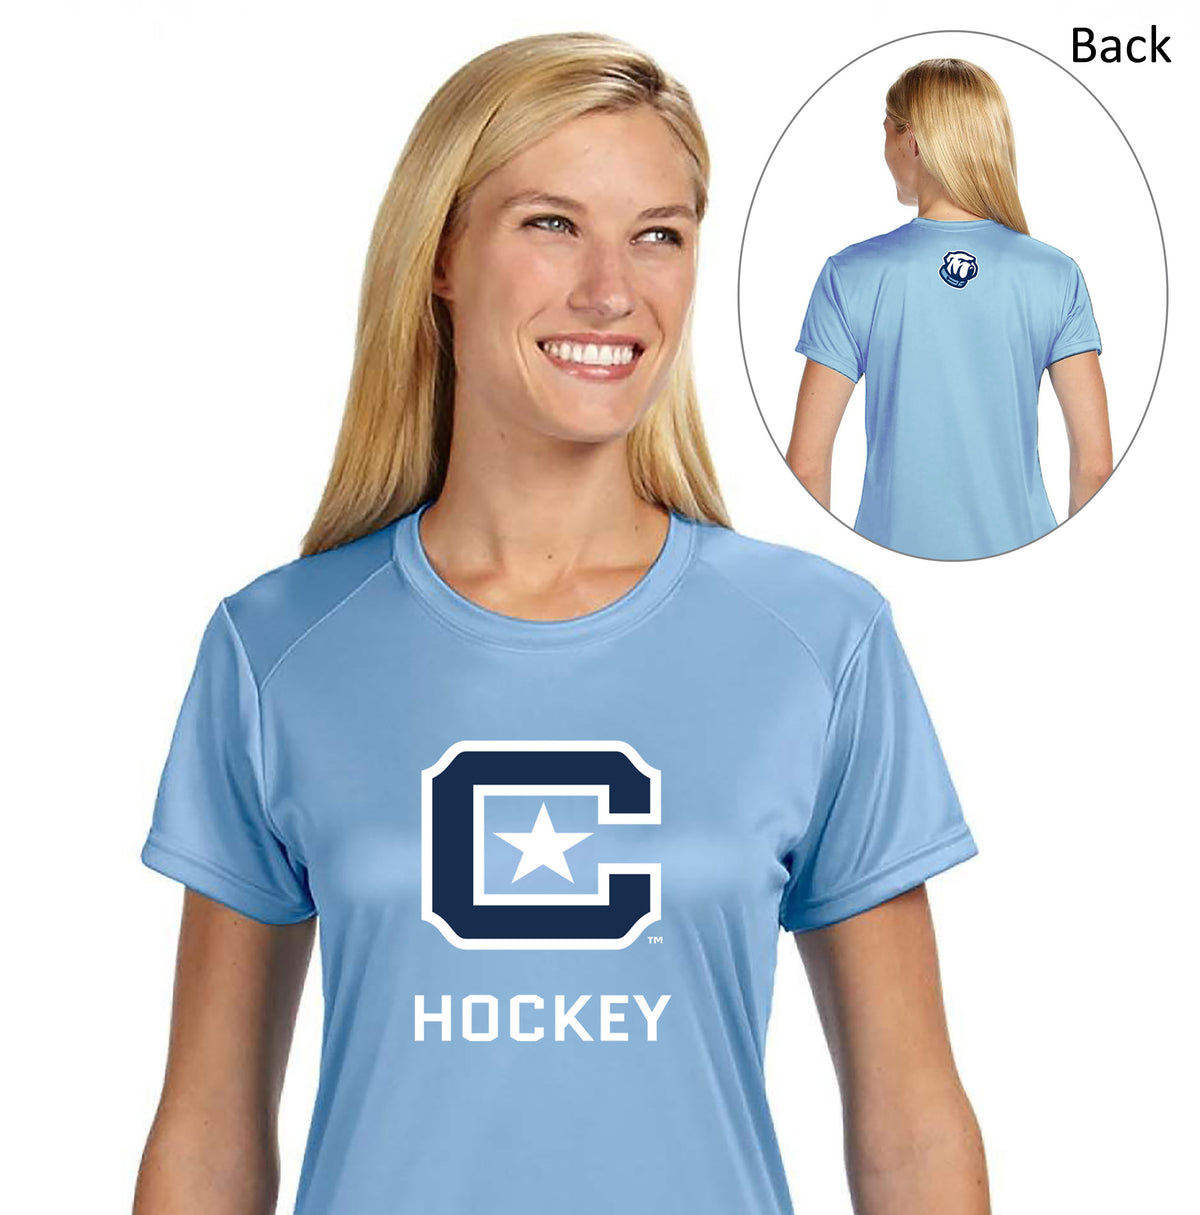 The Citadel, Club Sports - Hockey, Ladies' Cooling Performance T-Shirt- Carolina Blue